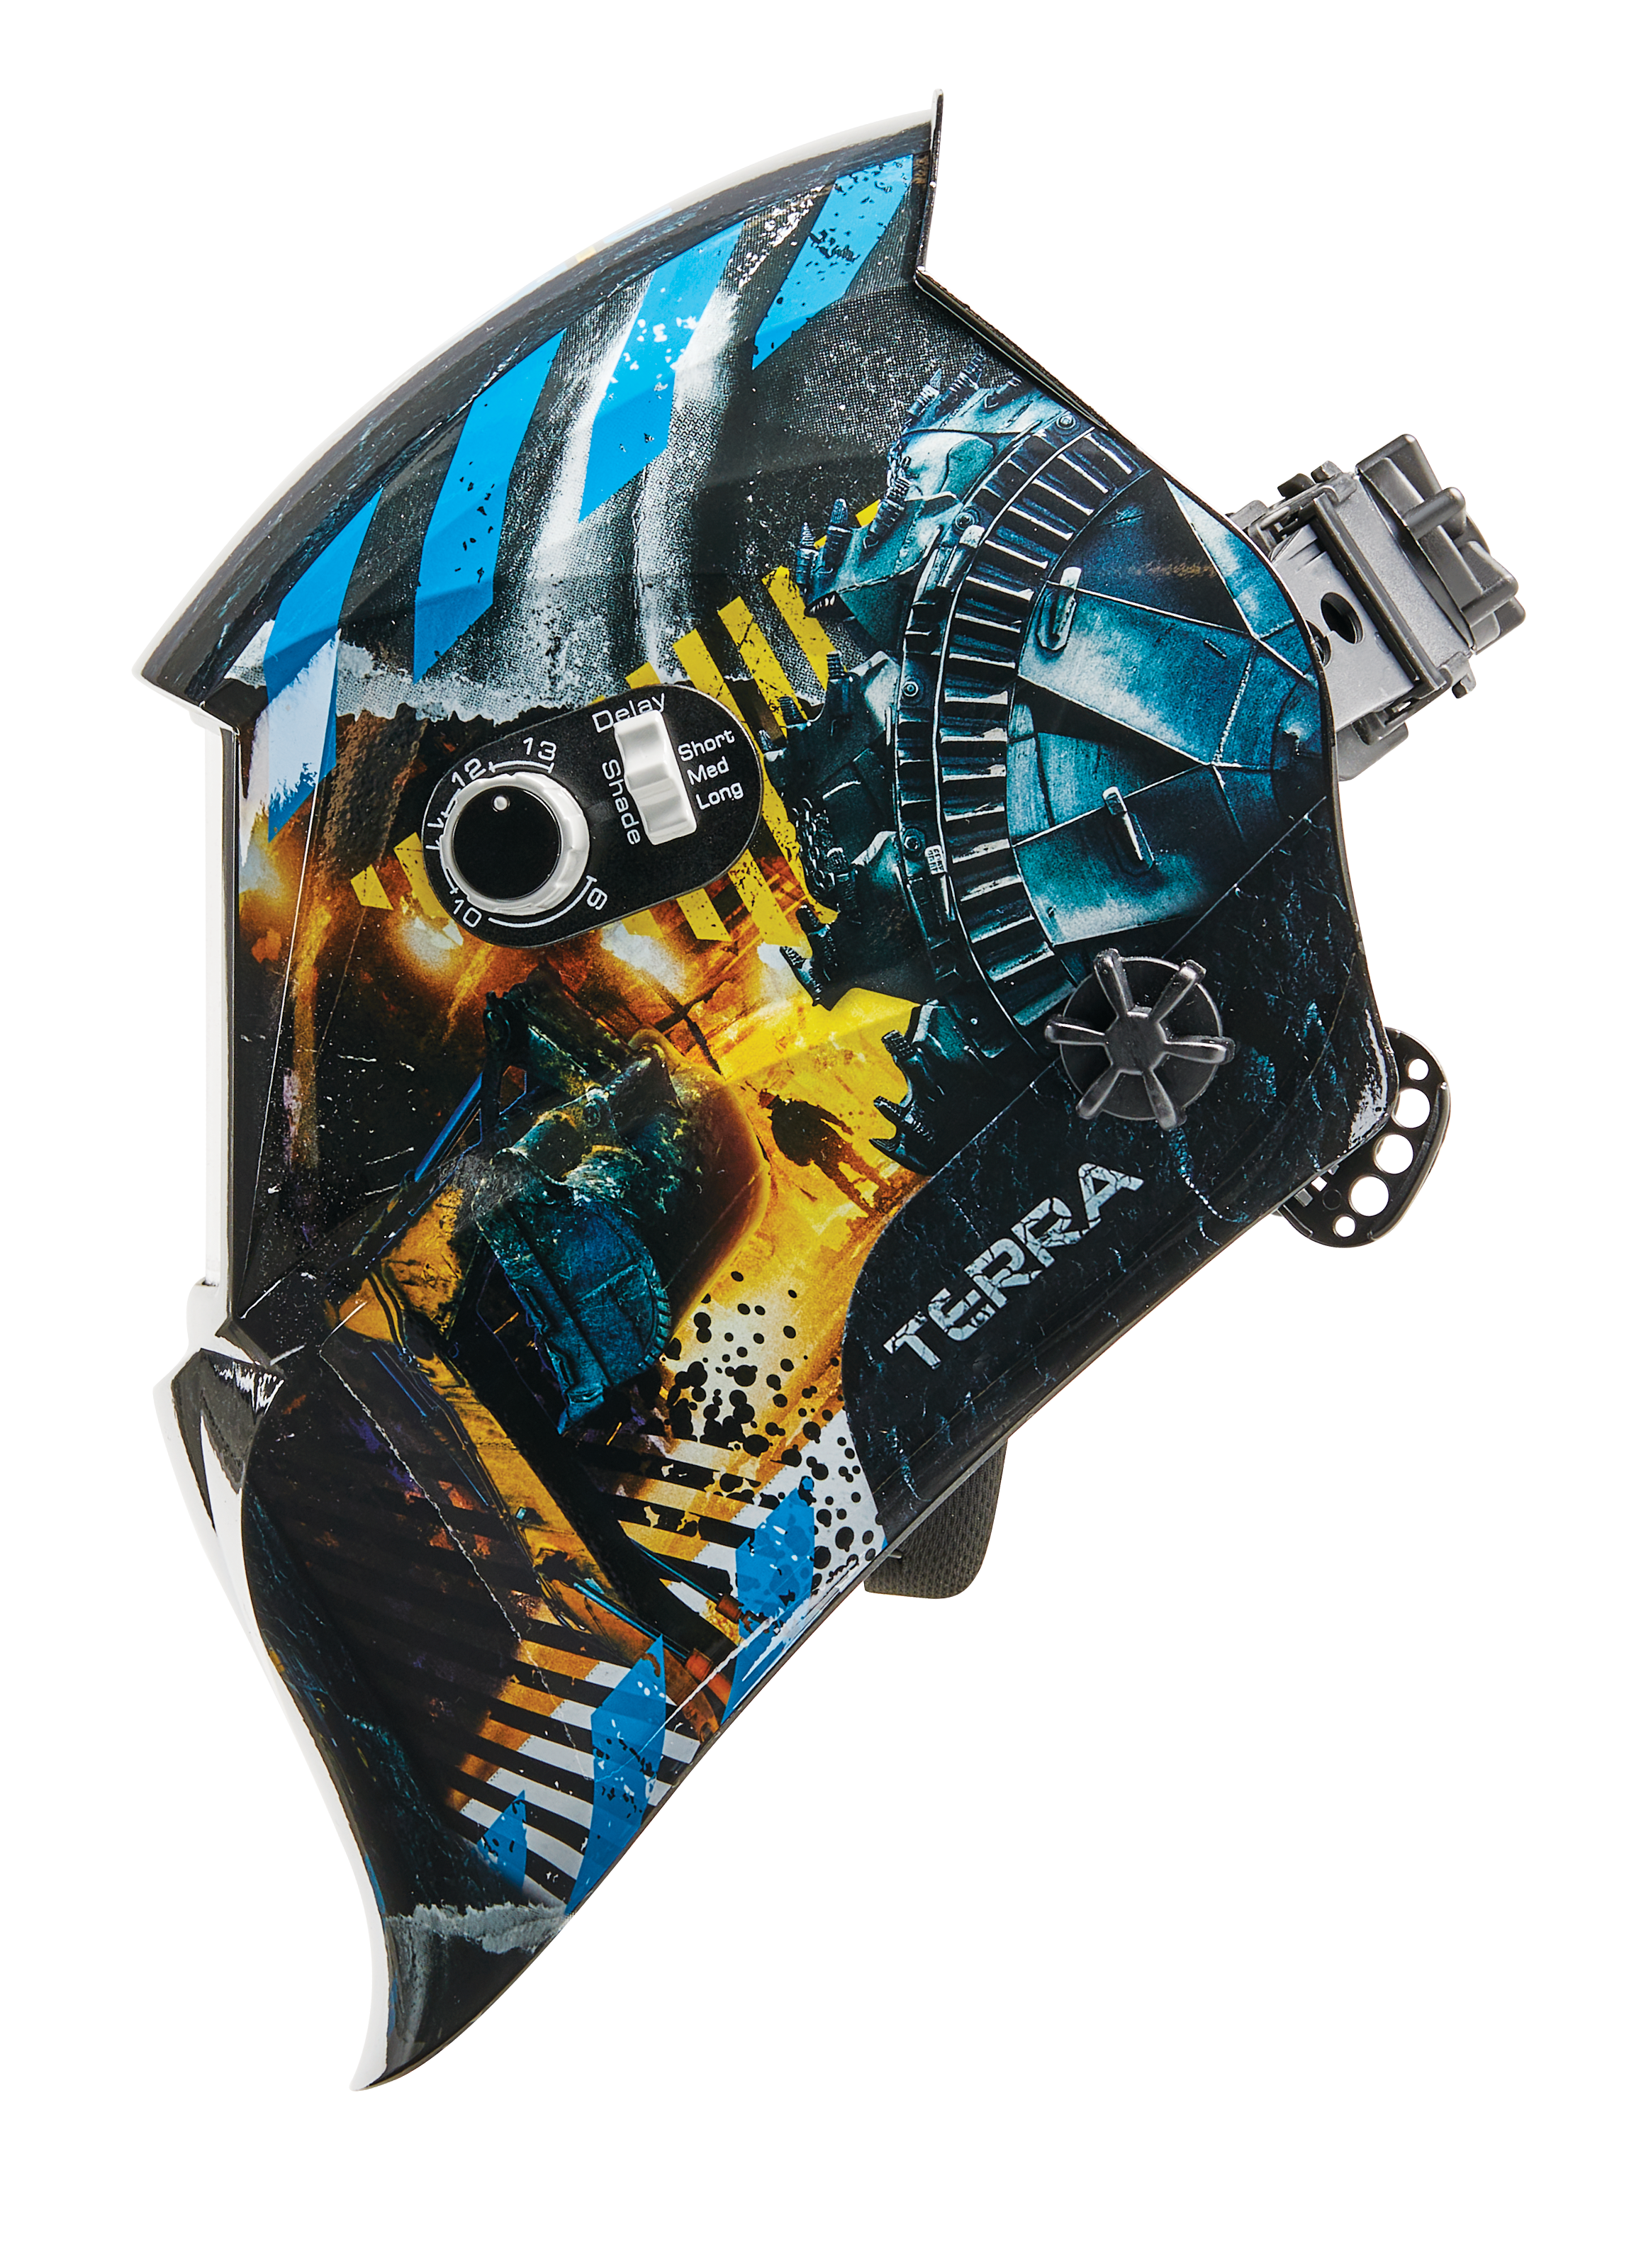 Cigweld Arcmaster XC40 Terra Welding Helmet